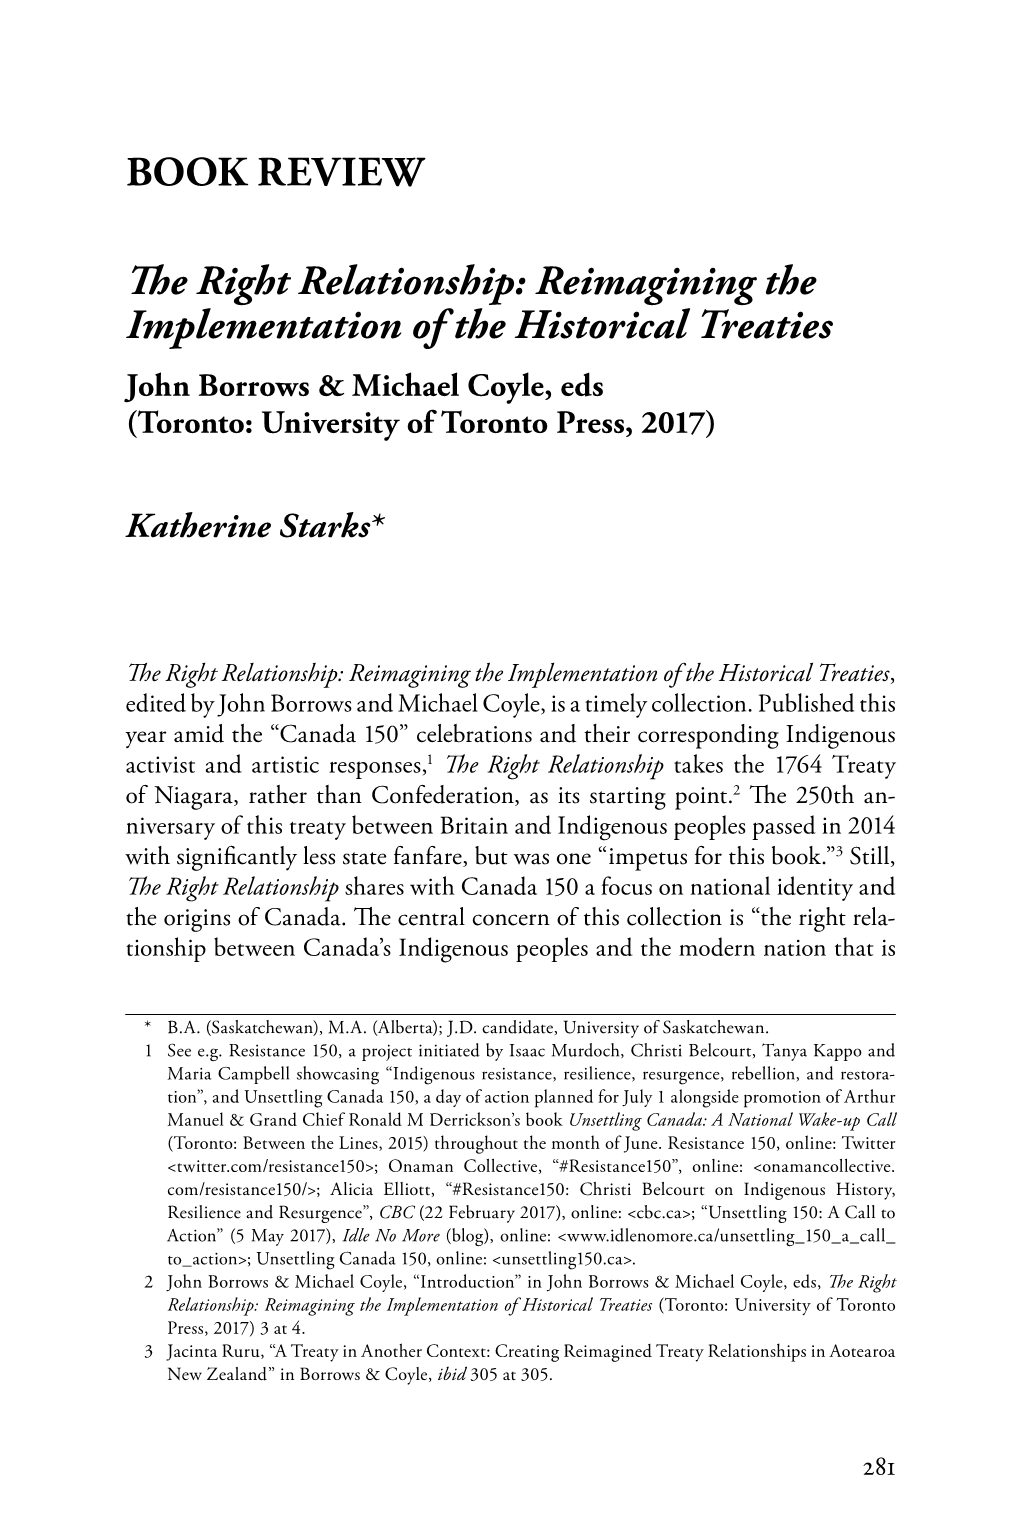 Reimagining the Implementation of the Historical Treaties John Borrows & Michael Coyle, Eds (Toronto: University of Toronto Press, 2017)